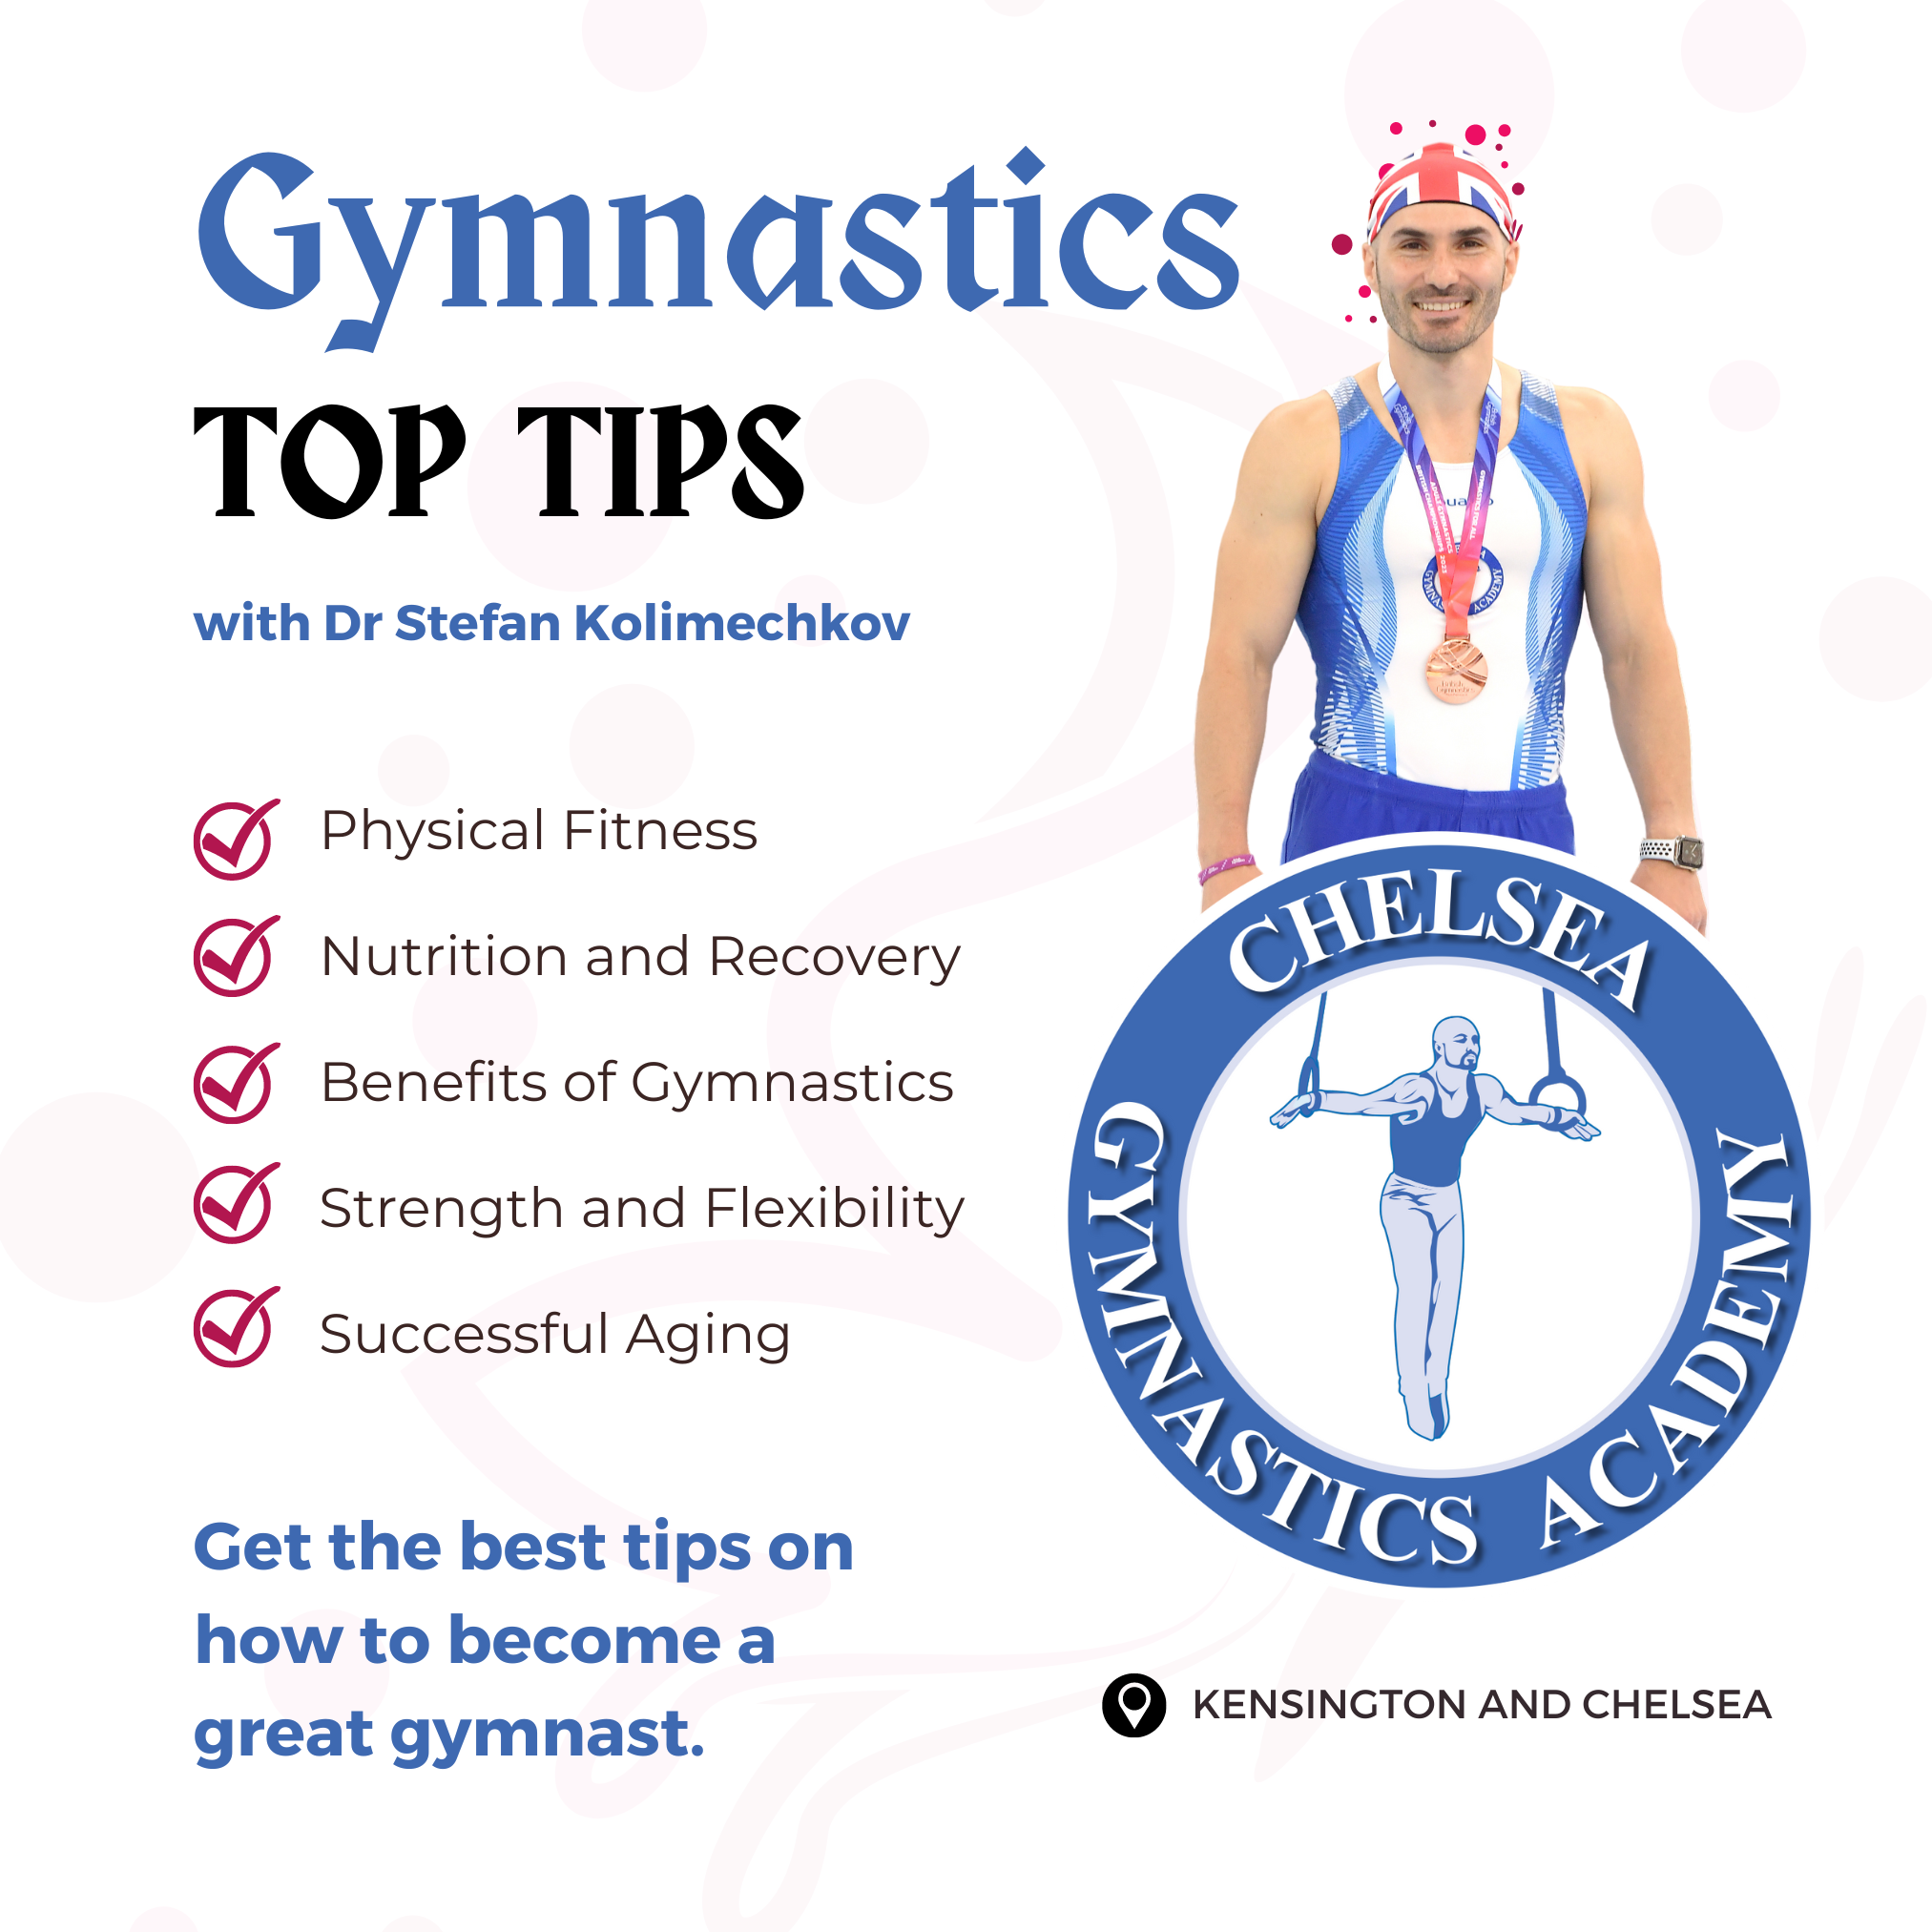 Gymnastics top tips with Dr Stefan Kolimechkov